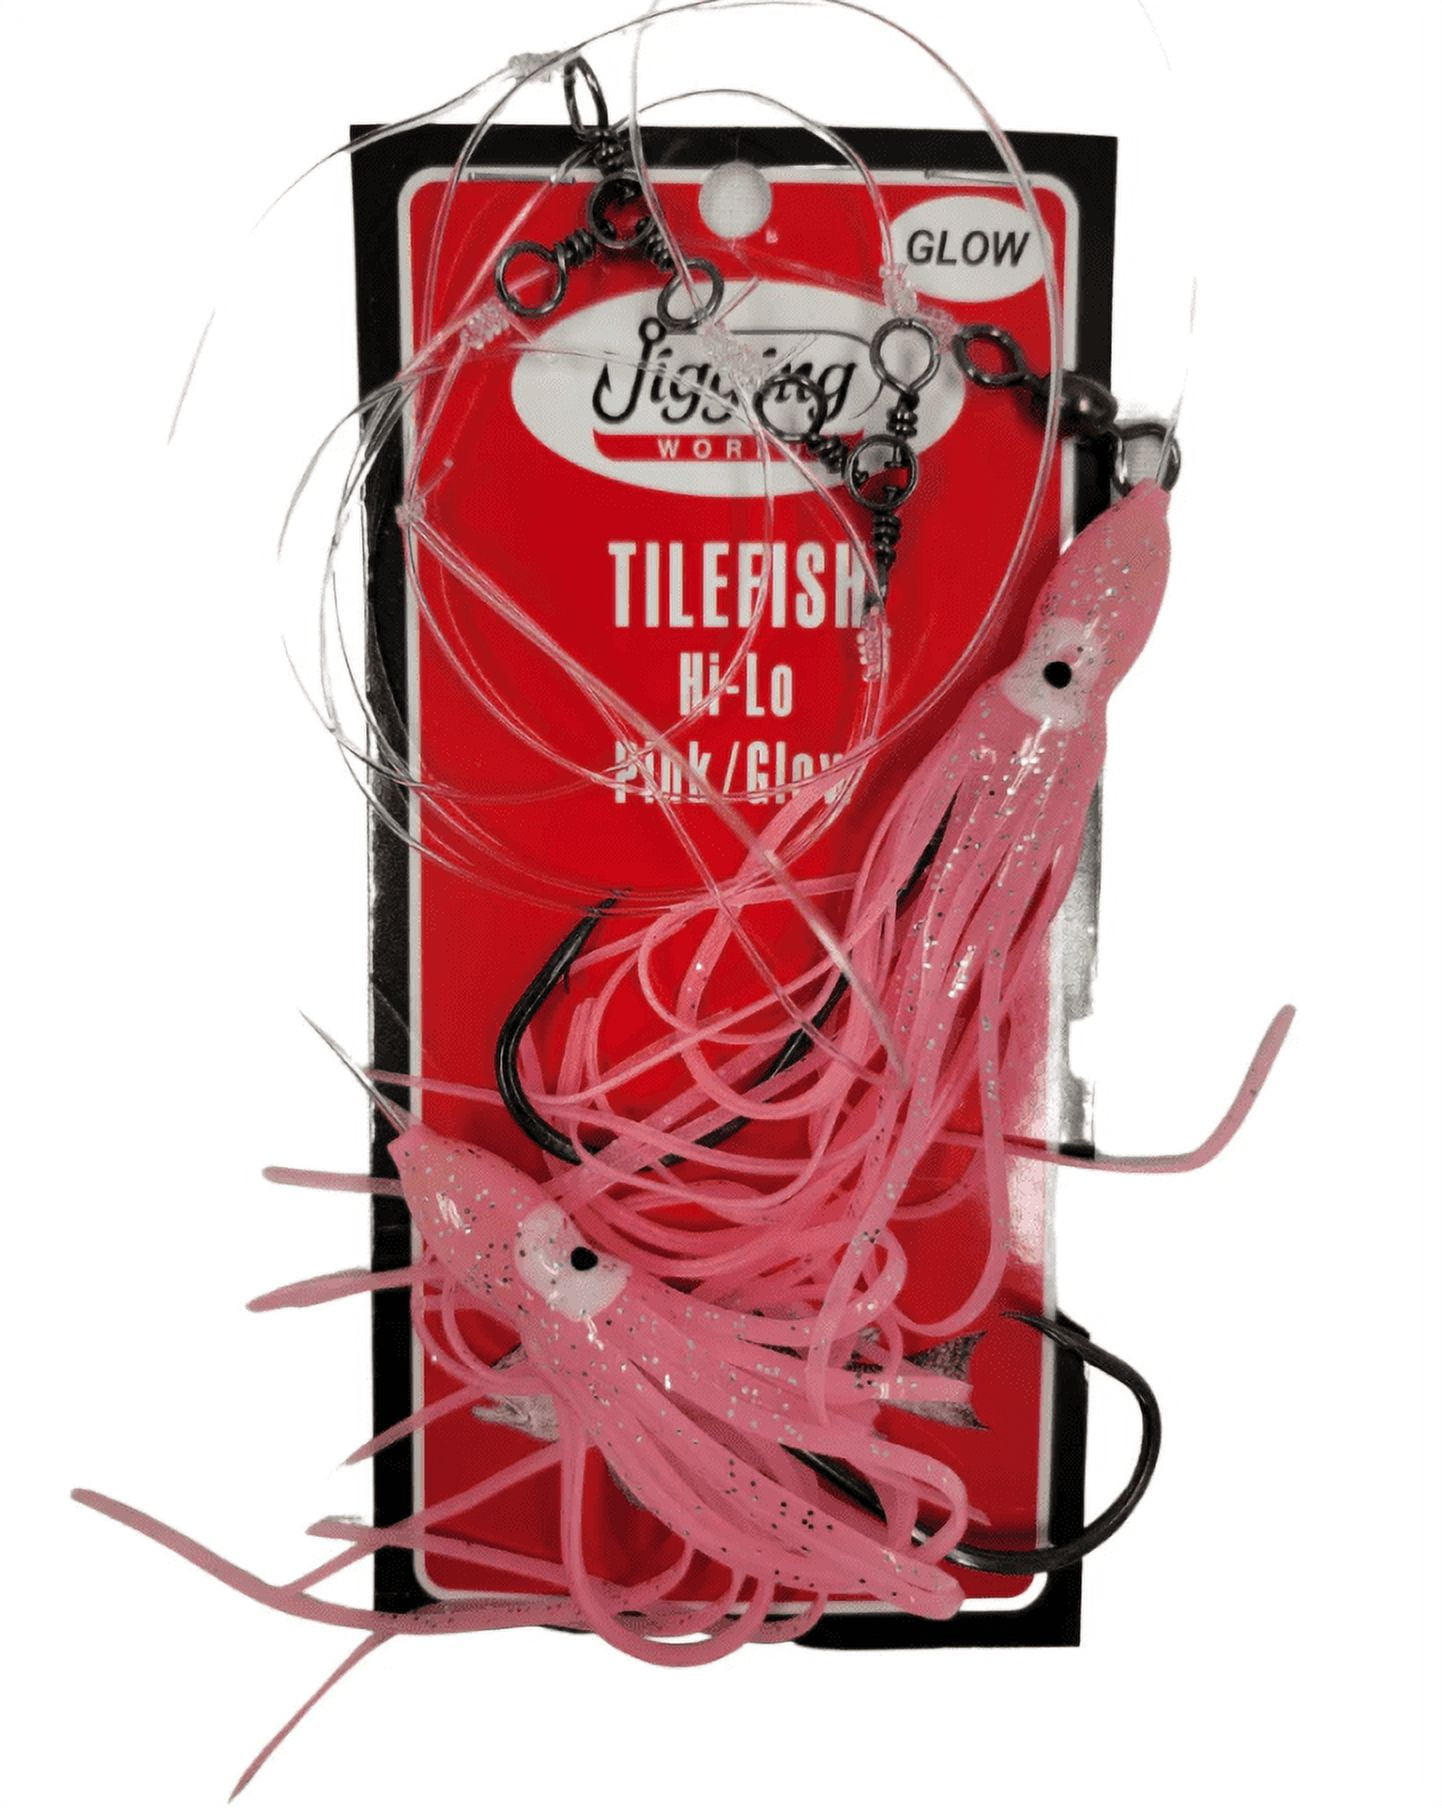 Jigging World Tile Fish Rig Hi-Lo 6 Squid Skirts 10/0 Pink/Glow